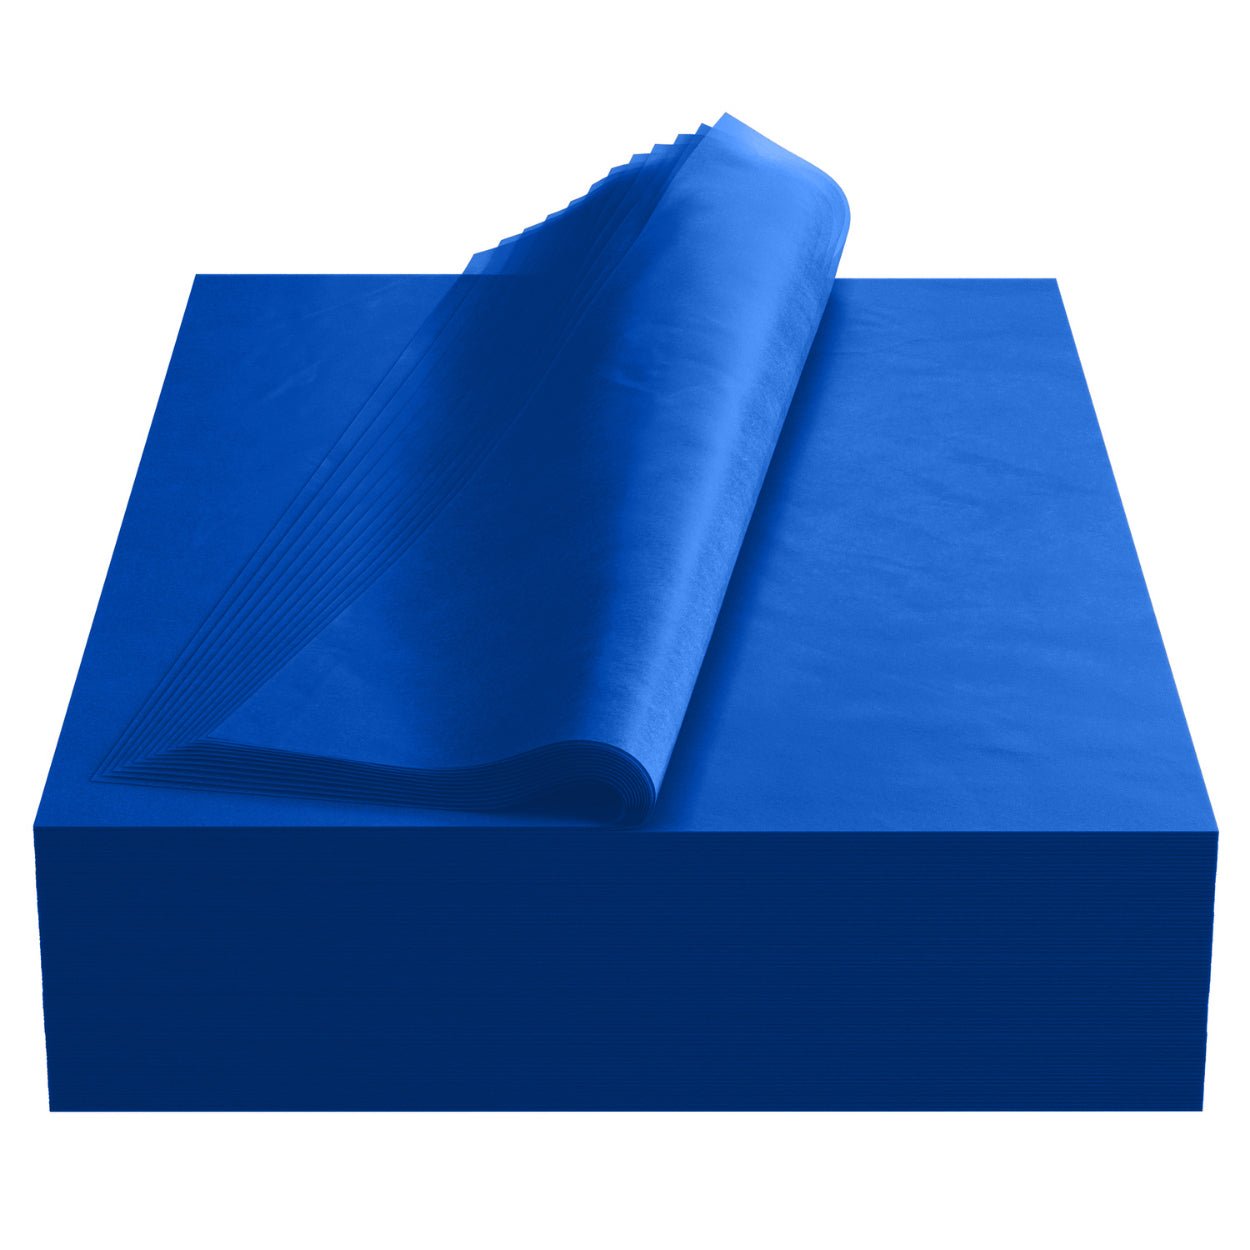 Case of Light Blue Tissue Paper - 20x30